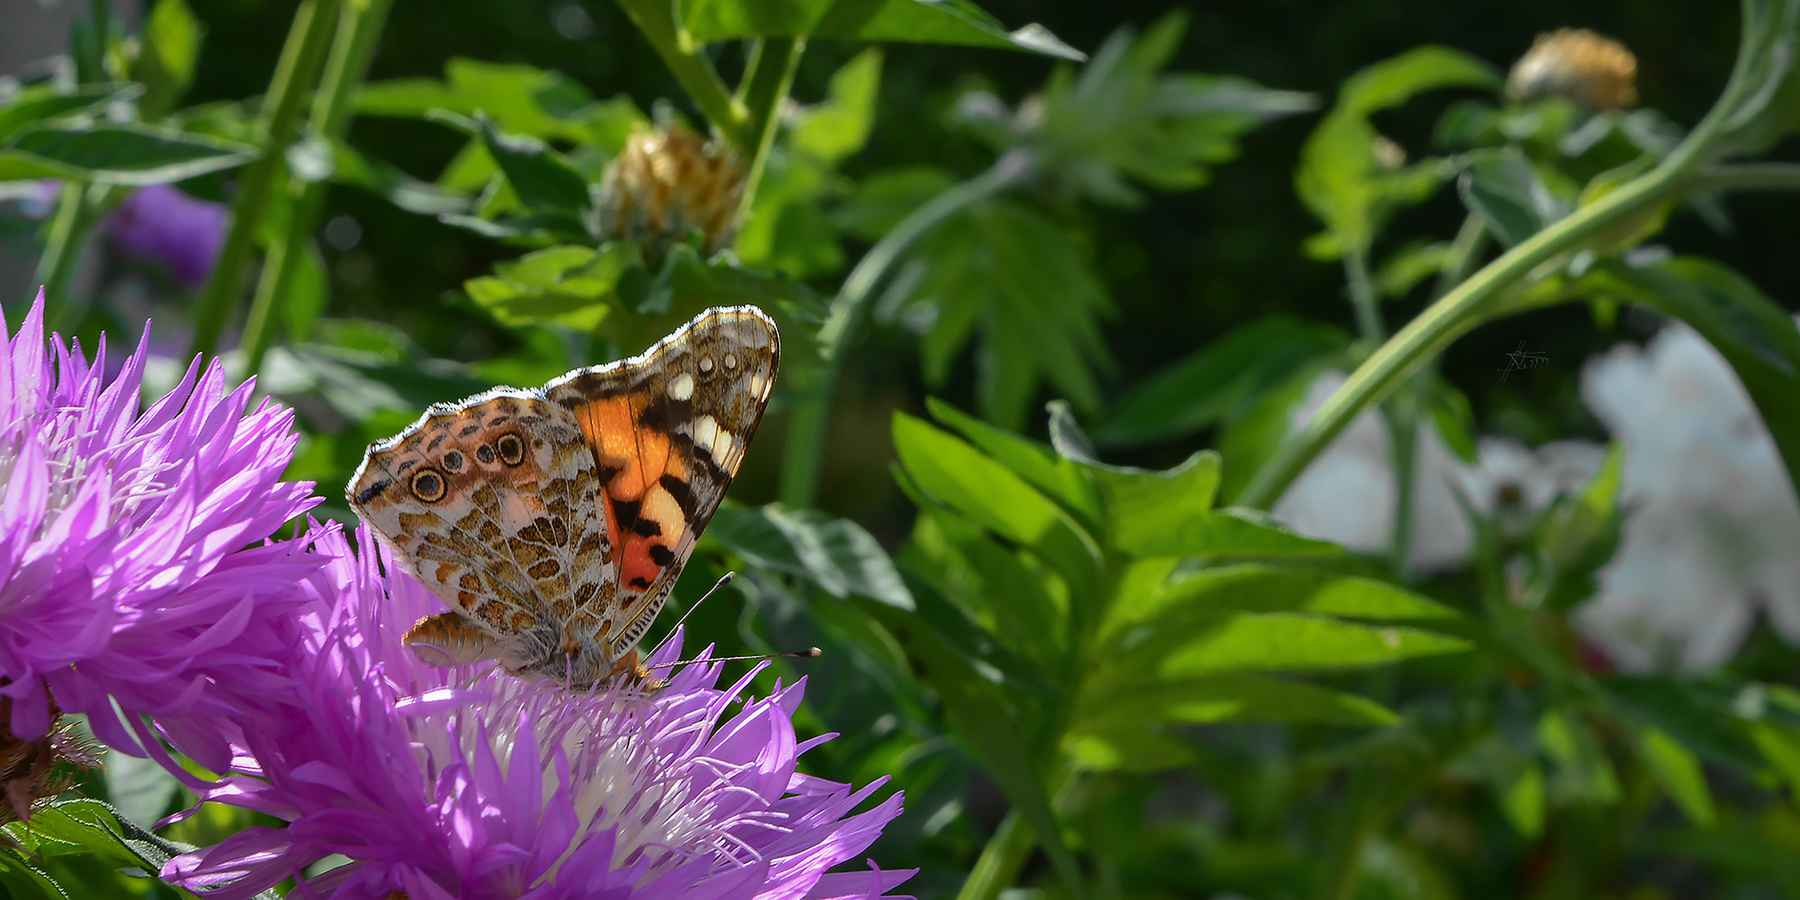 Порхающий май природа весна май бабочки 20190520